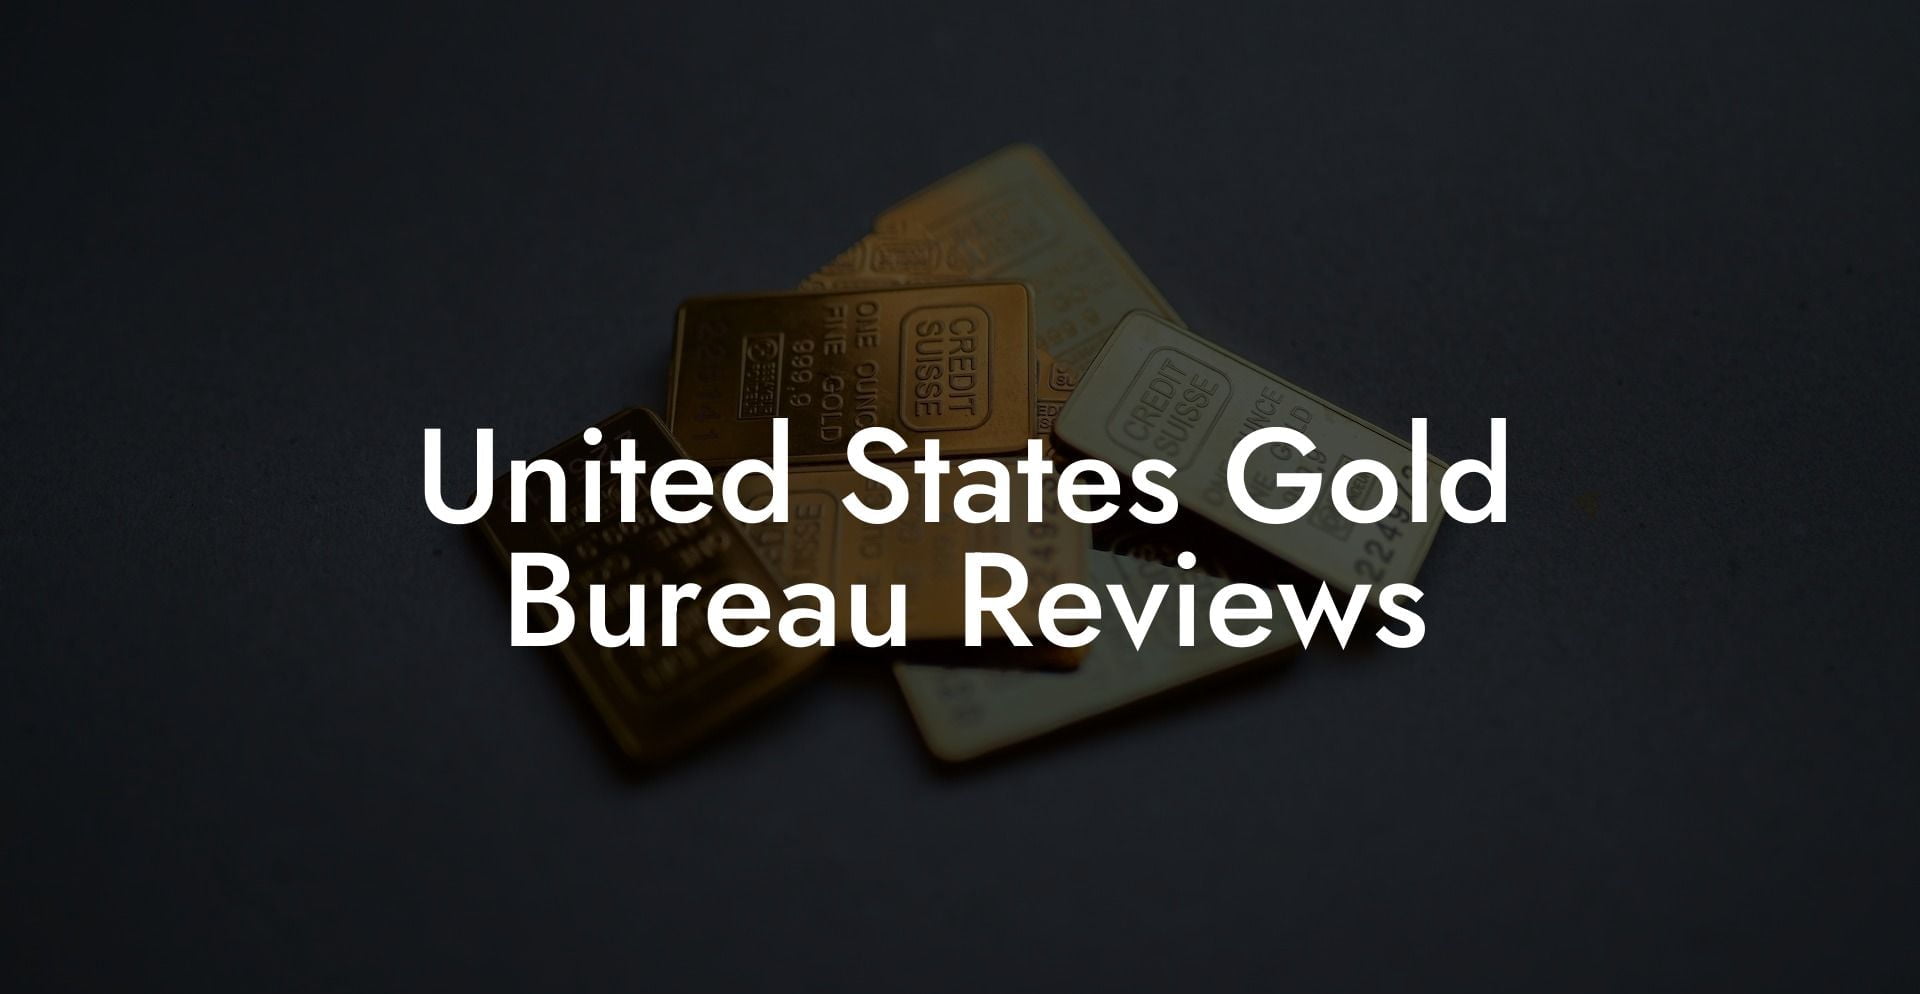 United States Gold Bureau Reviews